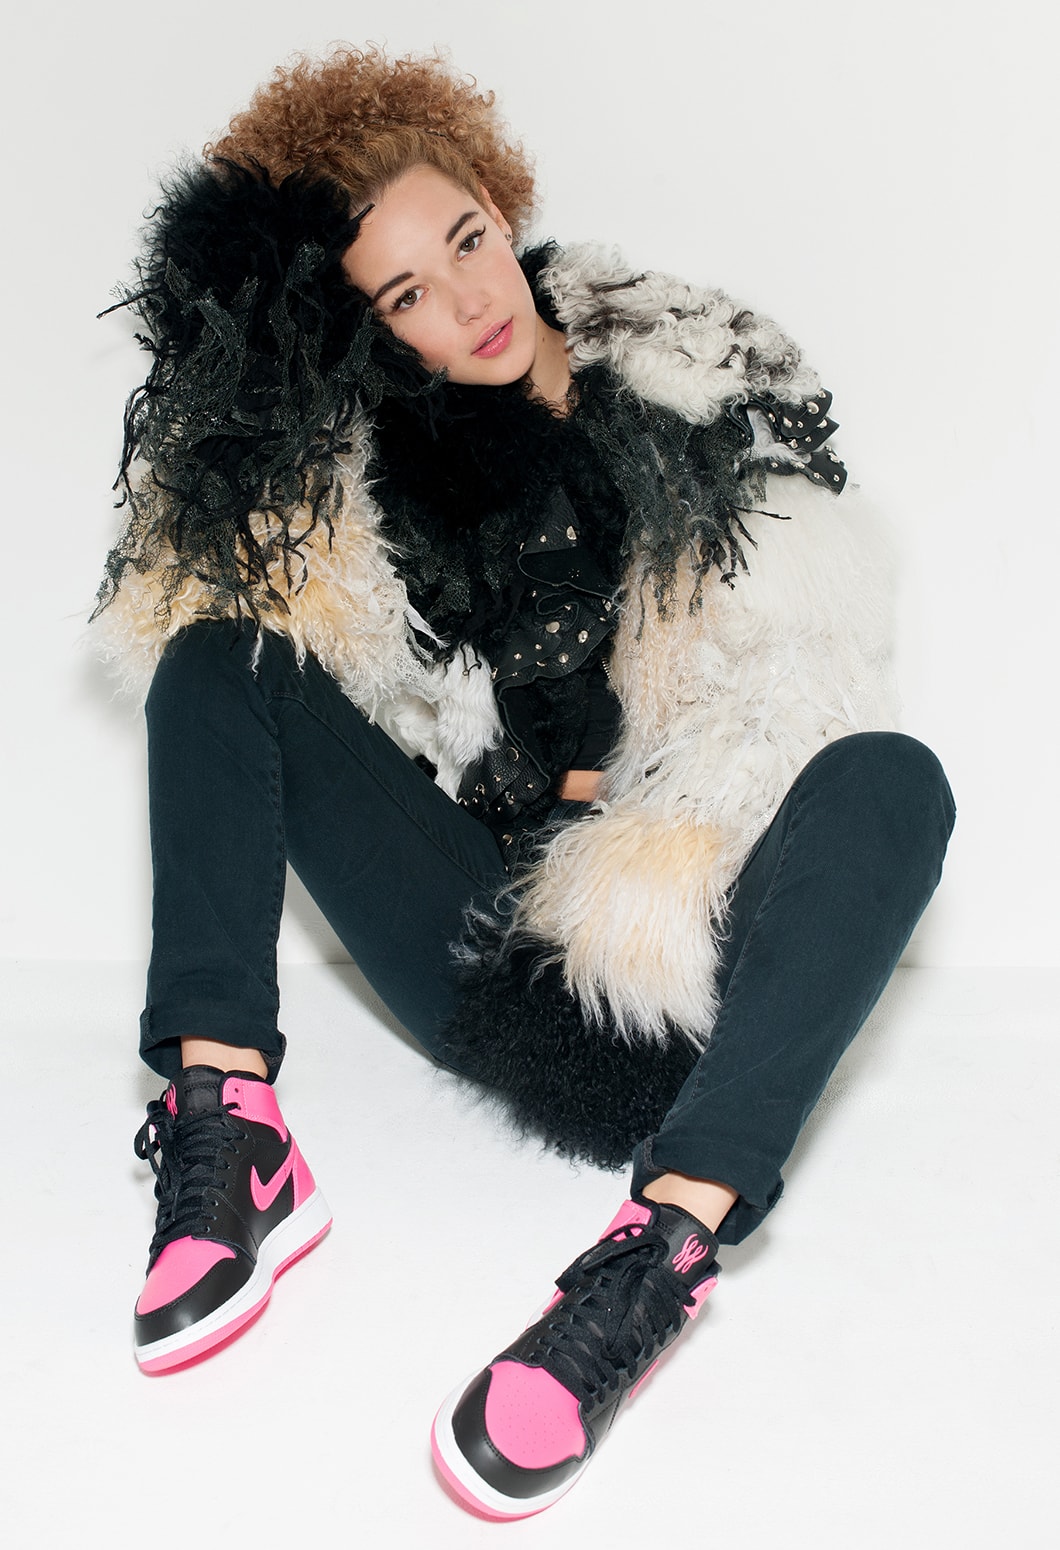 SARAH SNYDER | ウィメンズ＆メンズファッション誌『FREE MAGAZINE』